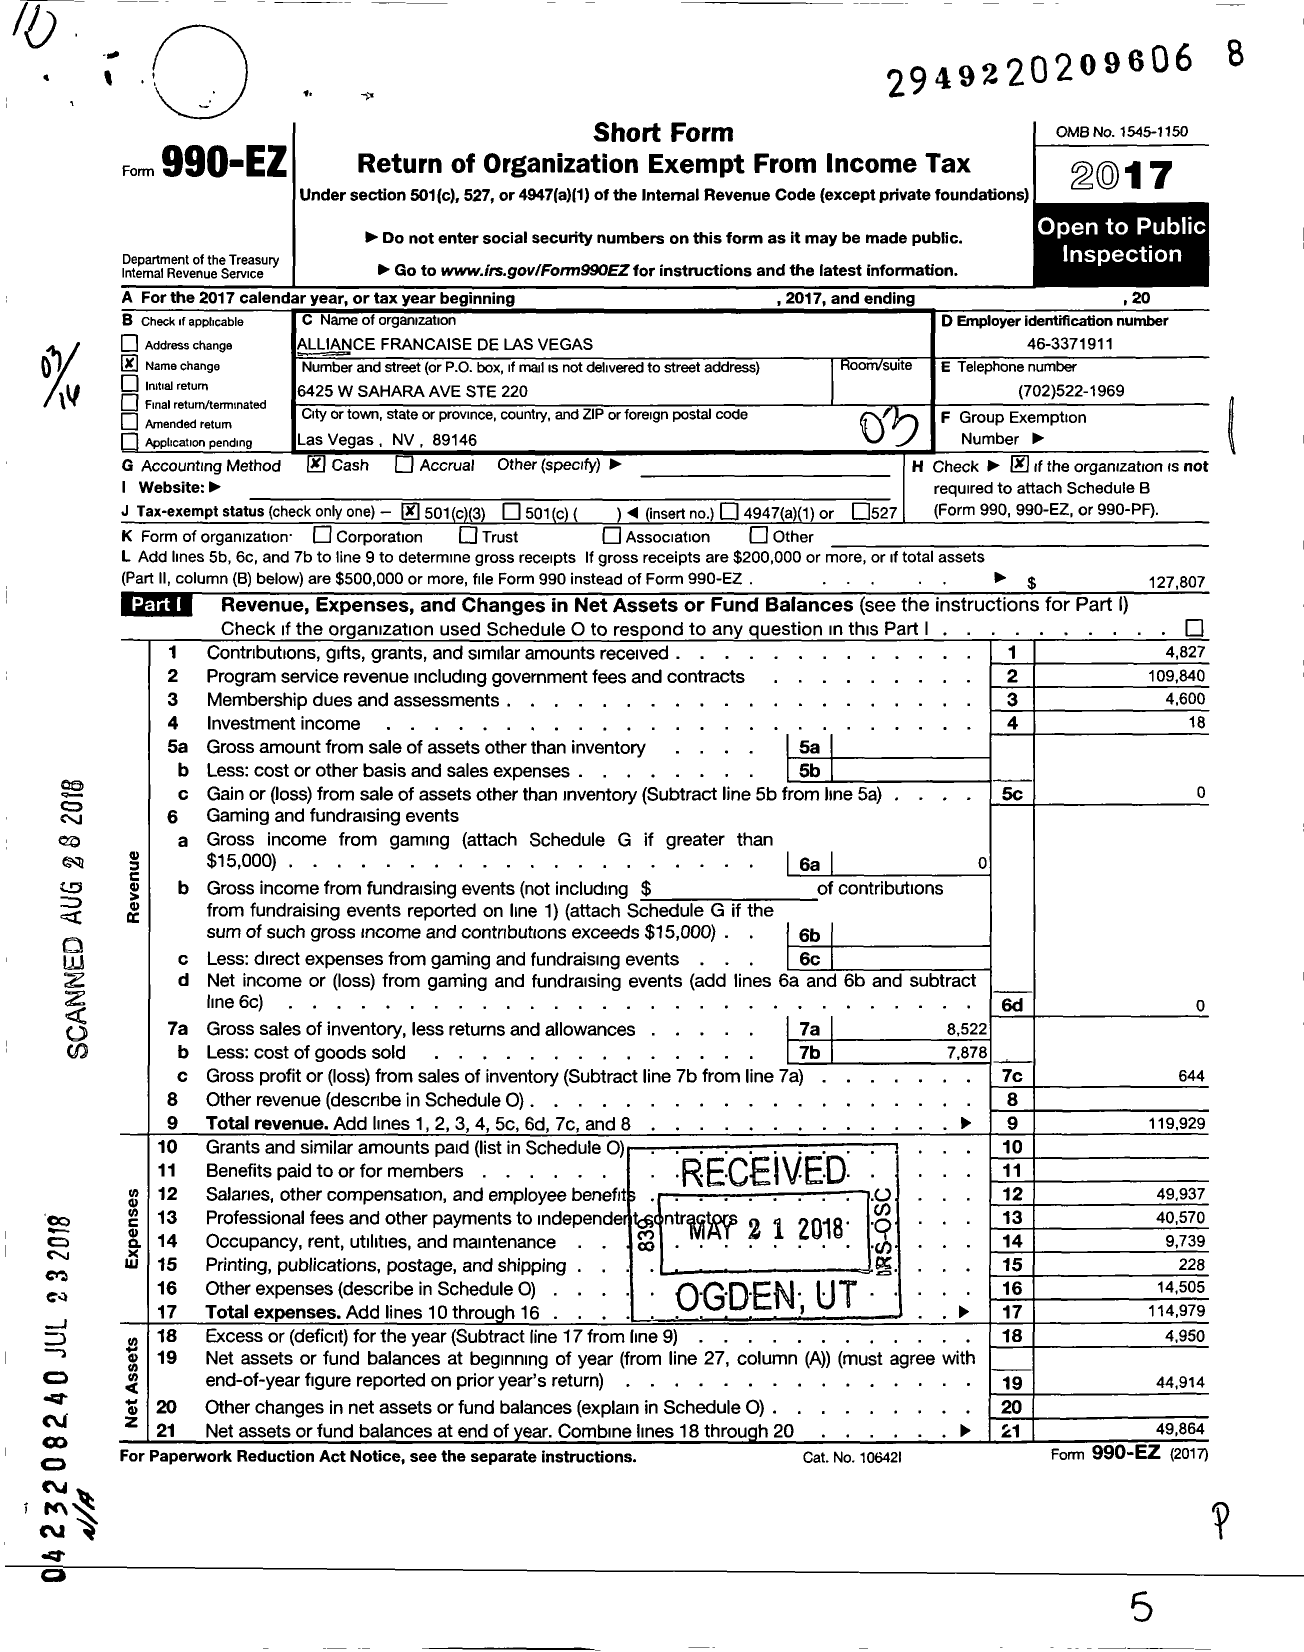 Image of first page of 2017 Form 990EZ for Alliance Francaise de Las Vegas